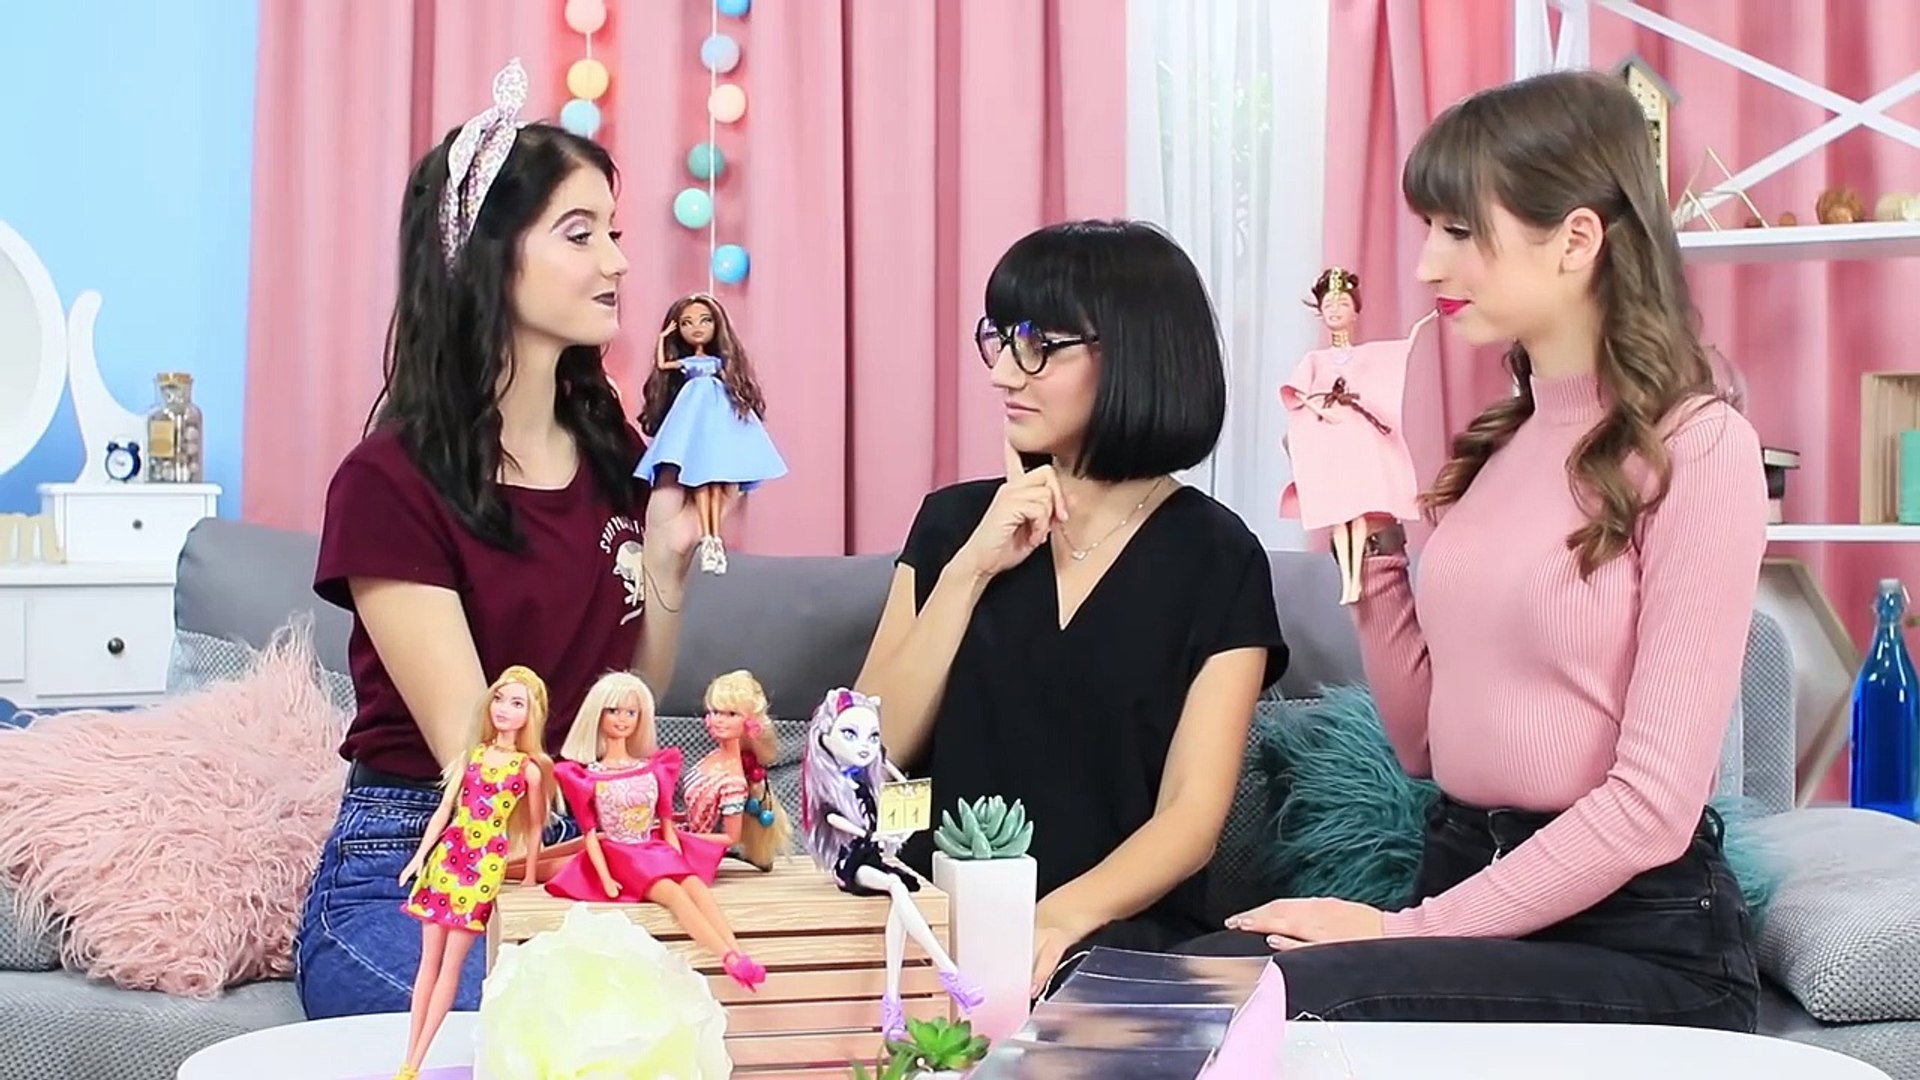 Clever Barbie Hacks vs Monster High Hacks Challenge! 16 Dolls Hacks And  Crafts - video Dailymotion